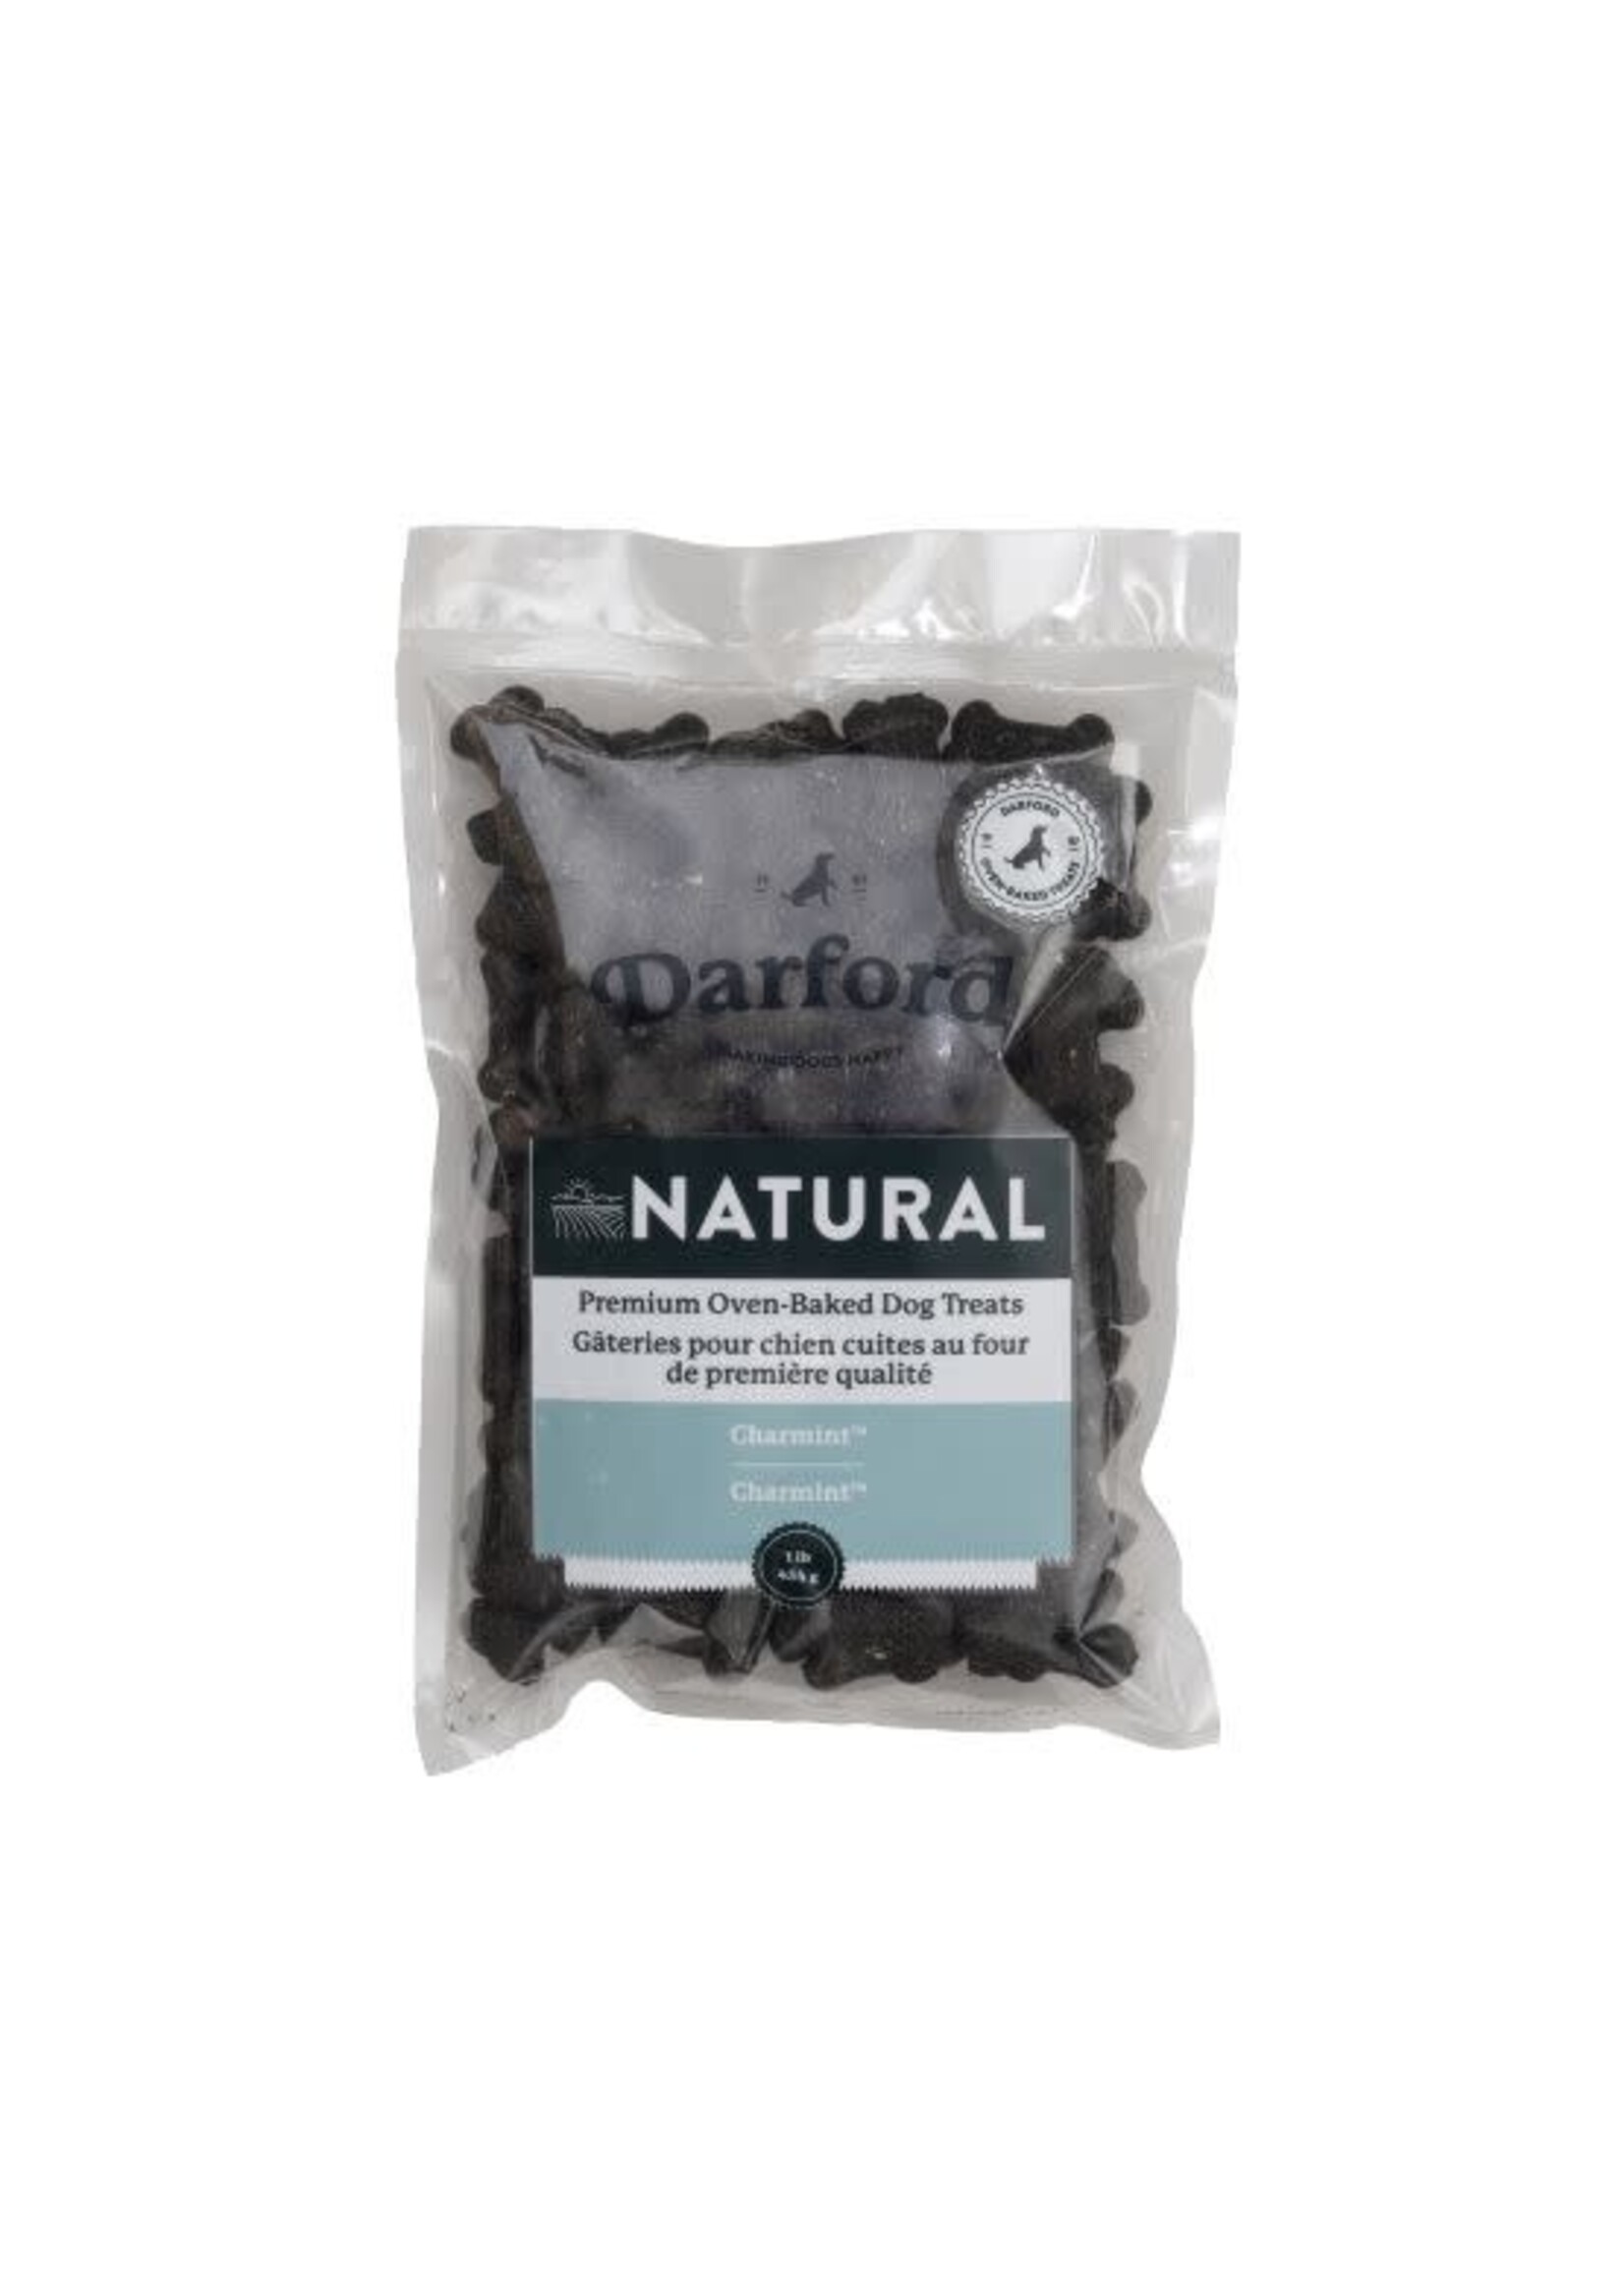 Darford DARFORD Natural gâteries pour chien- menthe & charbon 454g